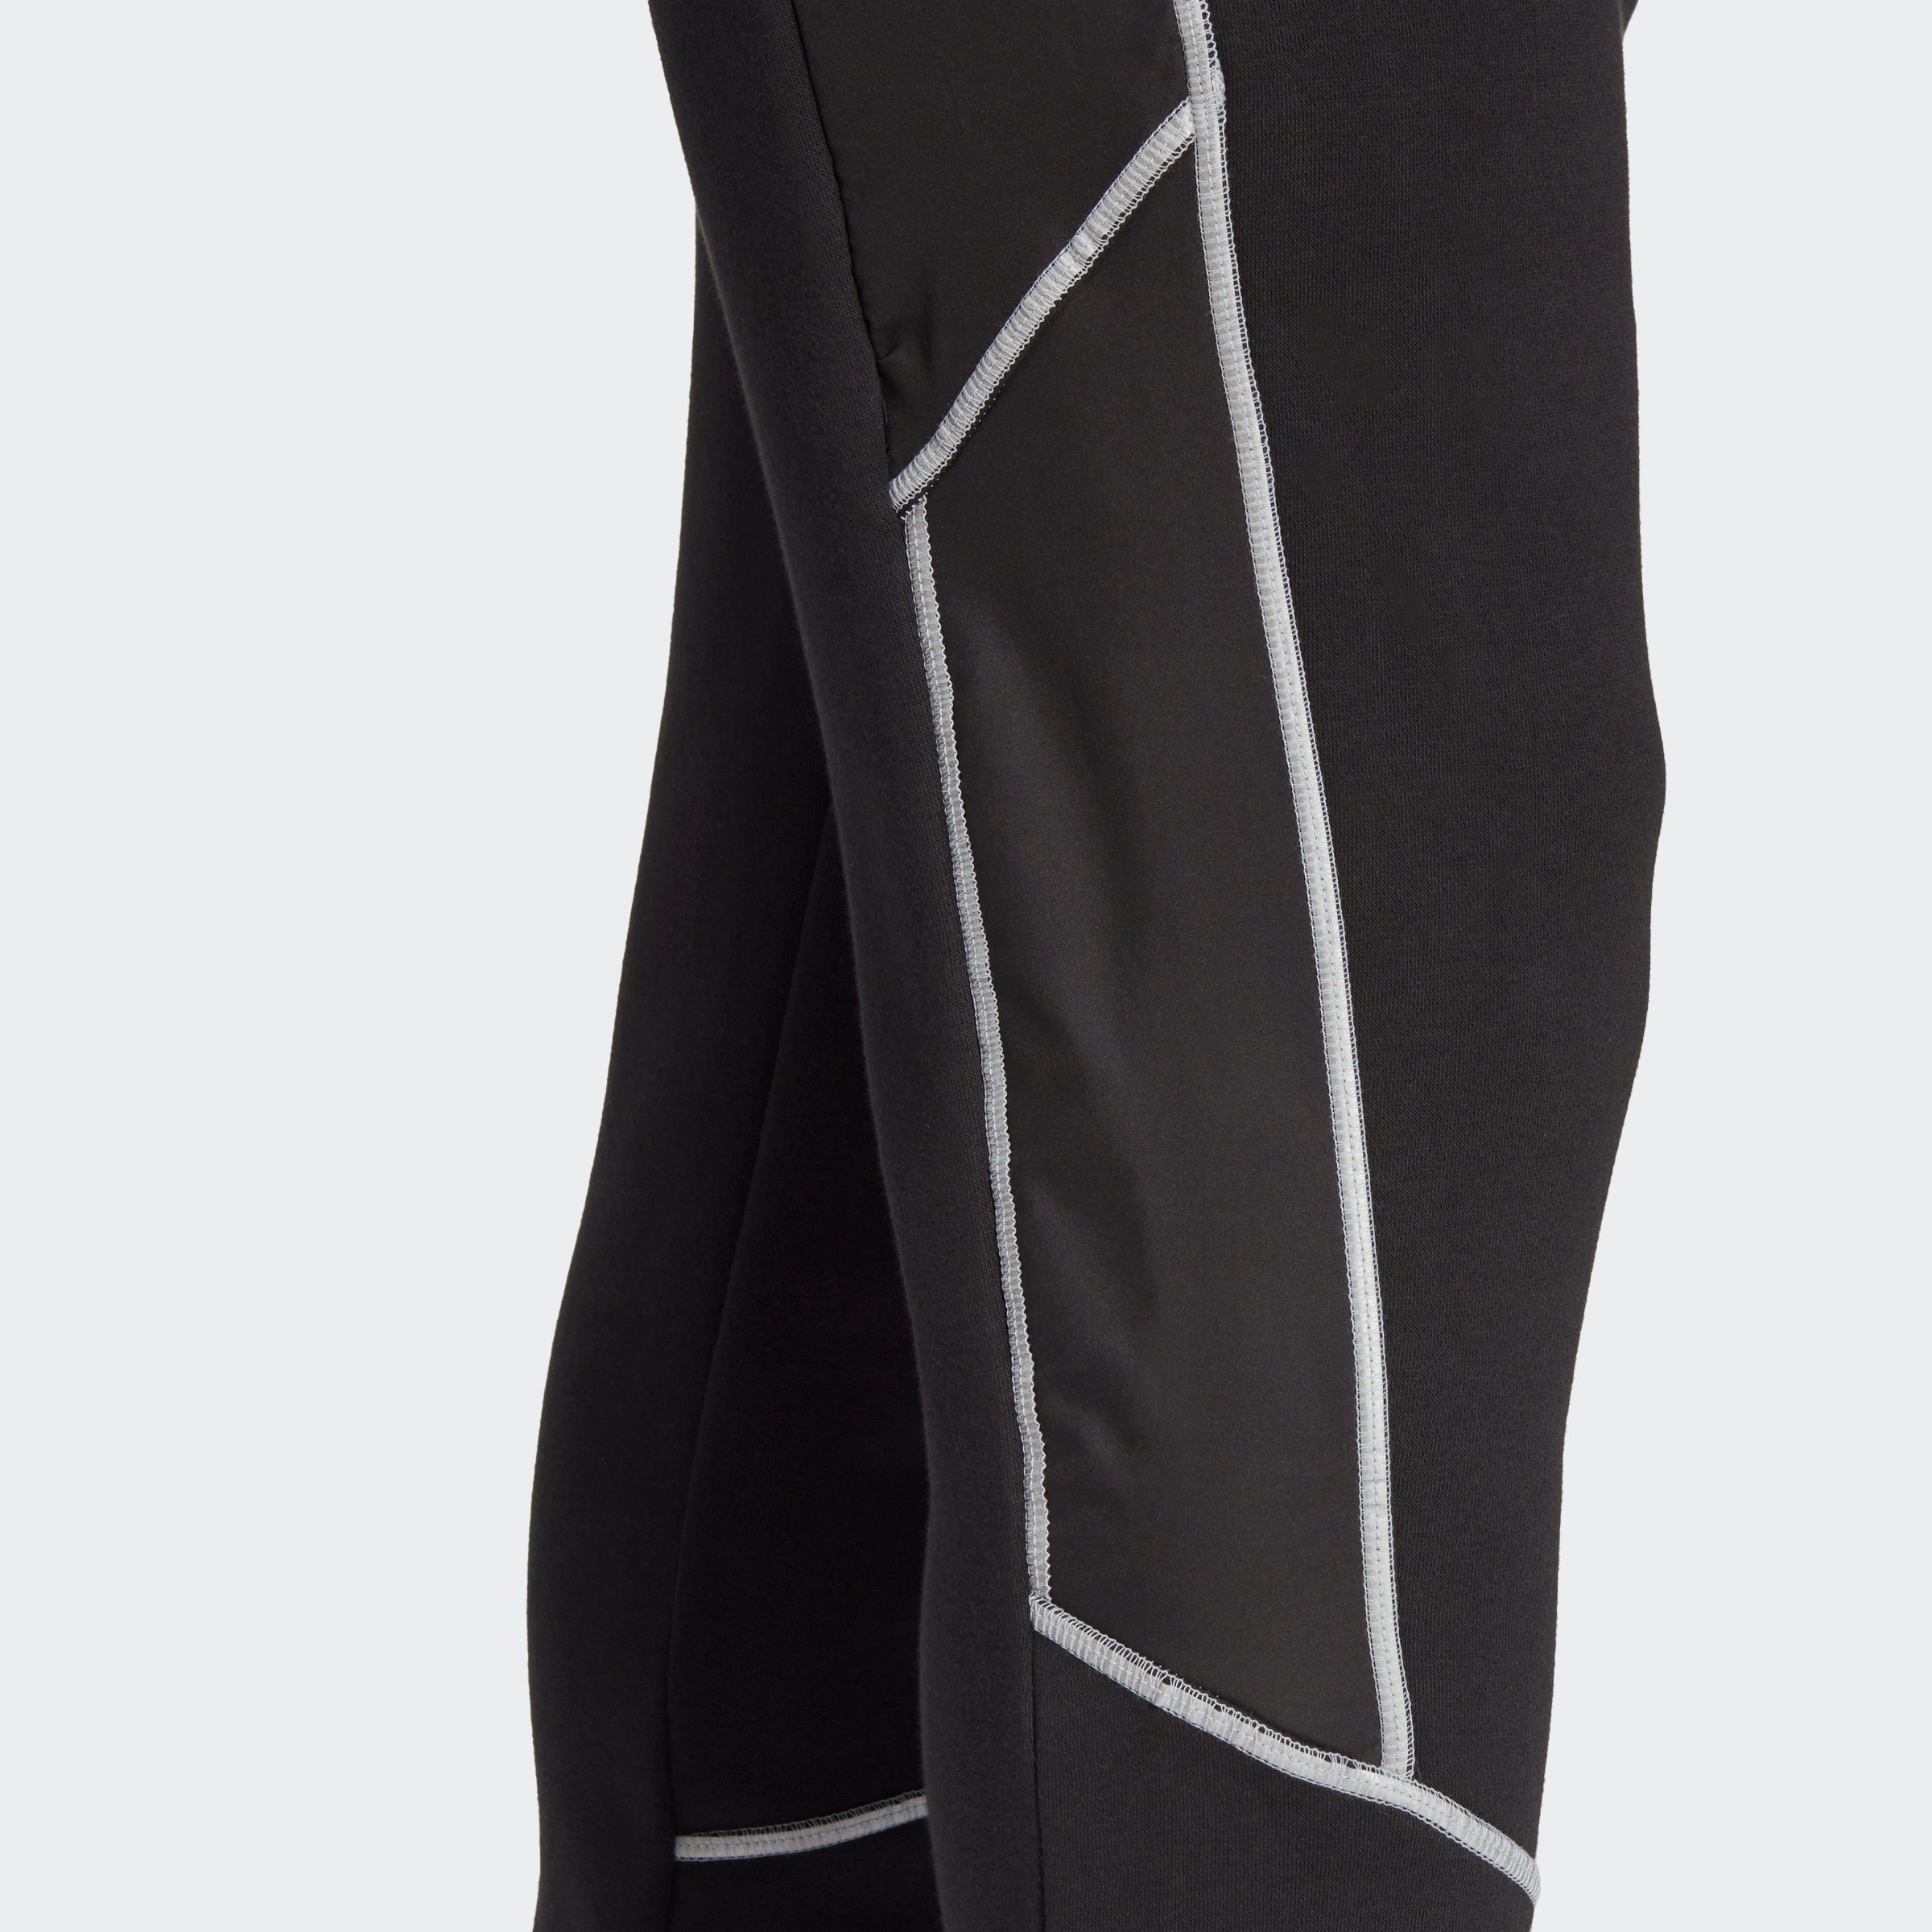 (1-tlg) schwarz ESSENTIALS HOSE REFLECT-IN-THE-DARK adidas Jogginghose Sportswear FLEECE